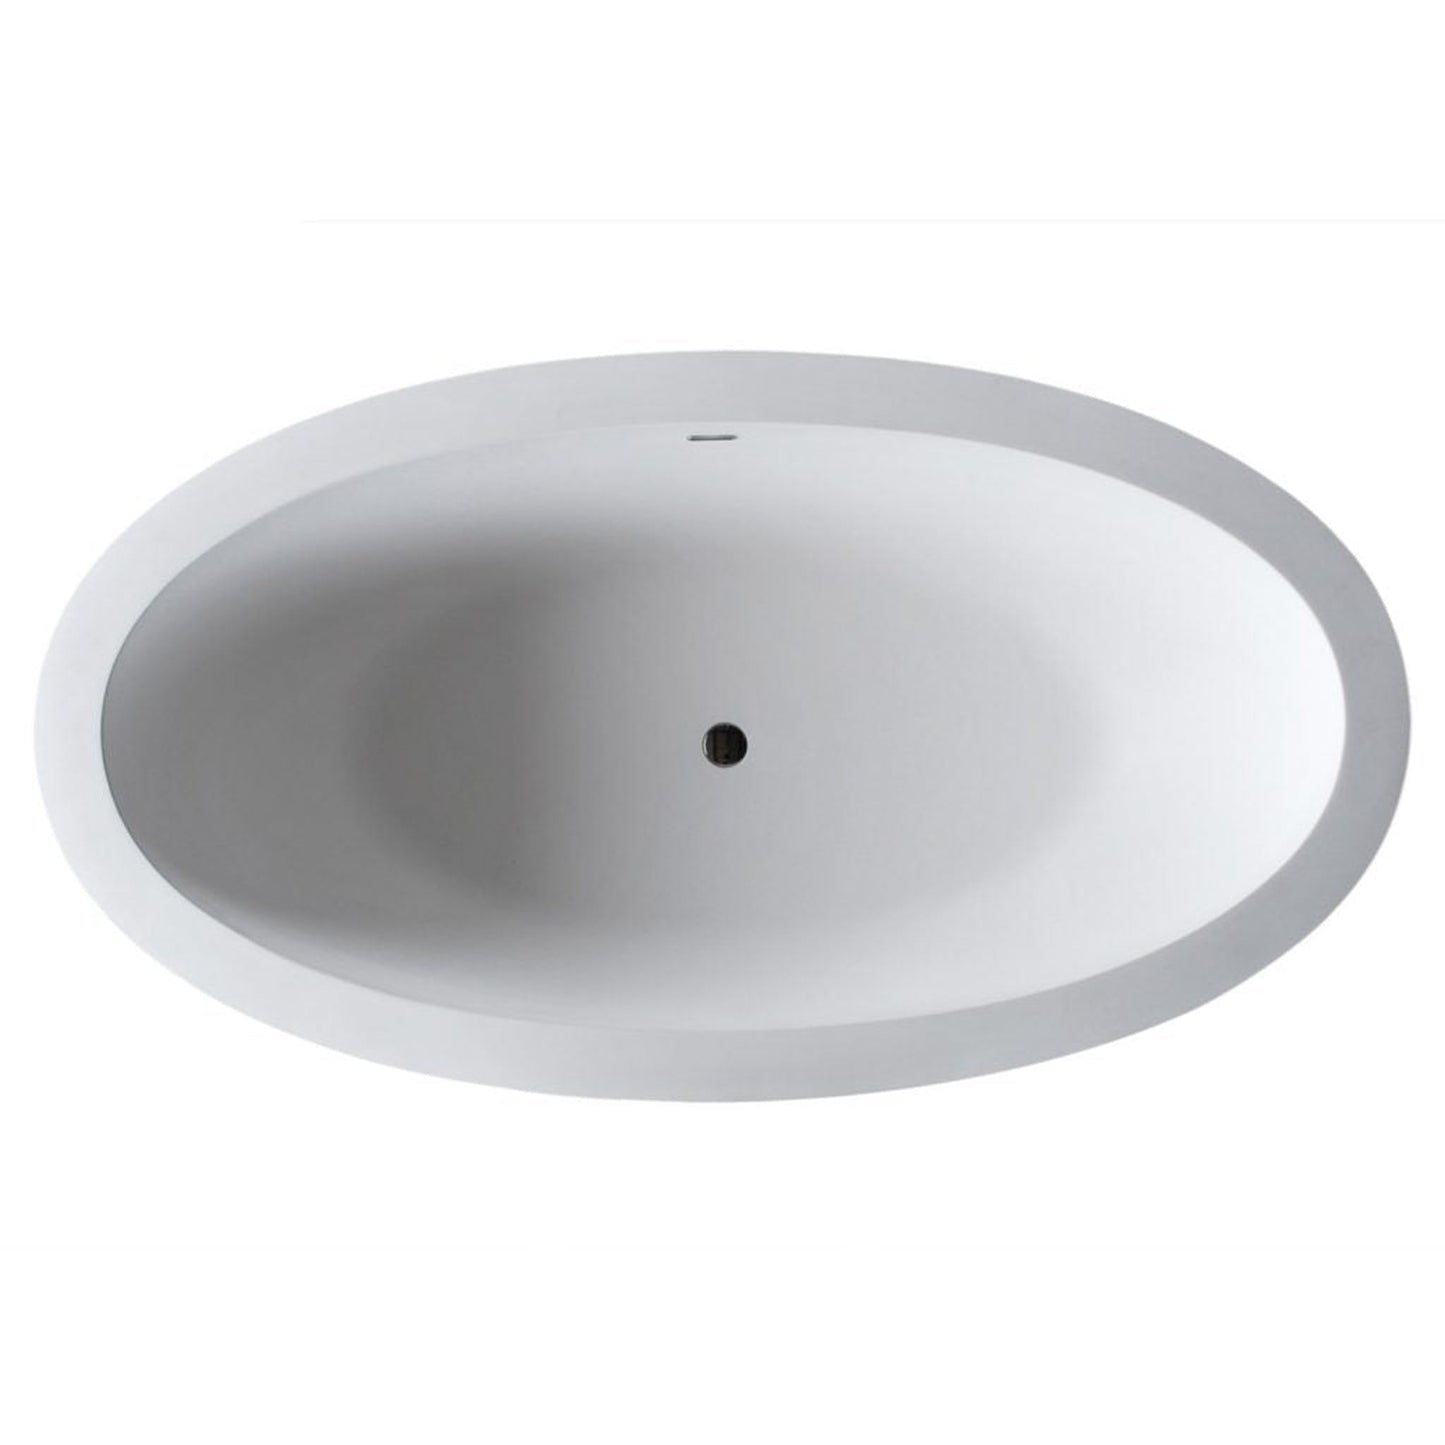 ANZZI Kekehun Series 76" x 41" Freestanding Matte White Bathtub With Built-In Overflow and Pop-Up Drain